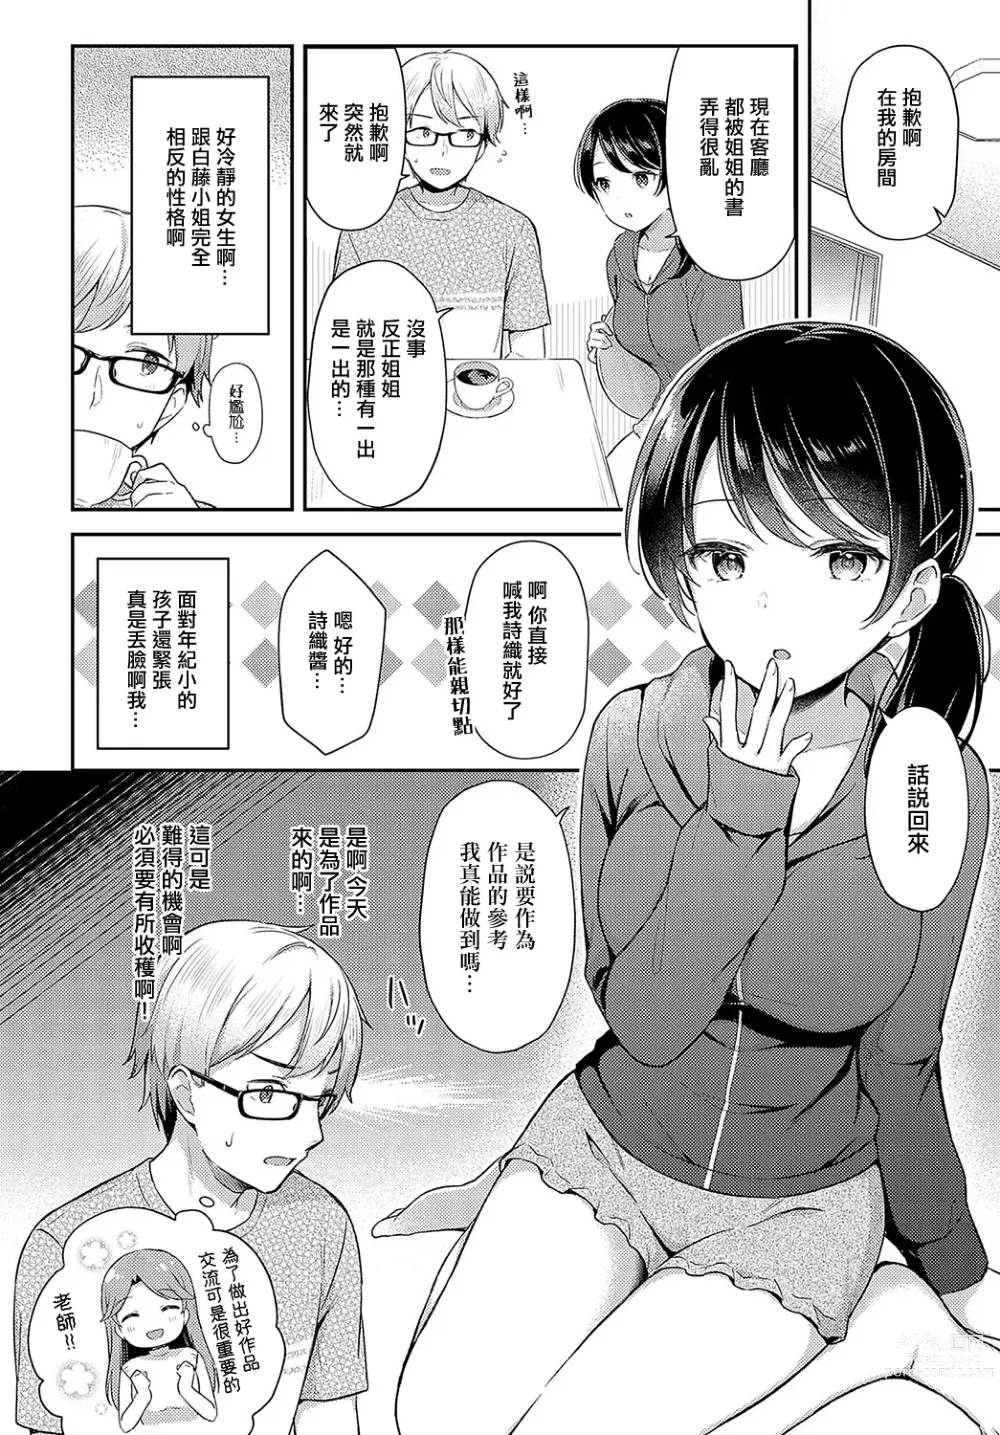 Page 3 of manga Han-imo x Youthful